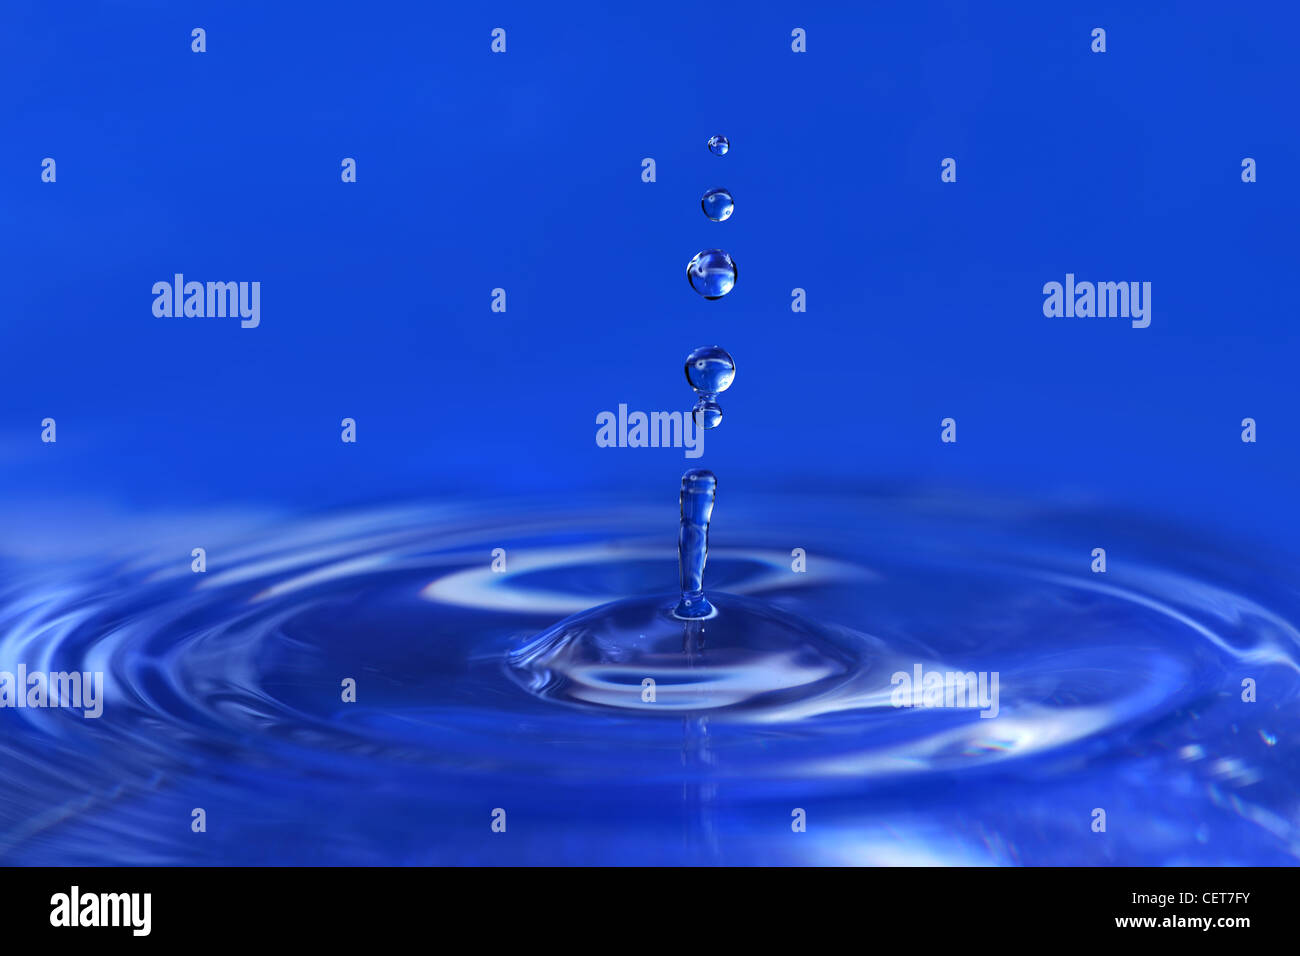 Water drops falling creating ripples Stock Photo